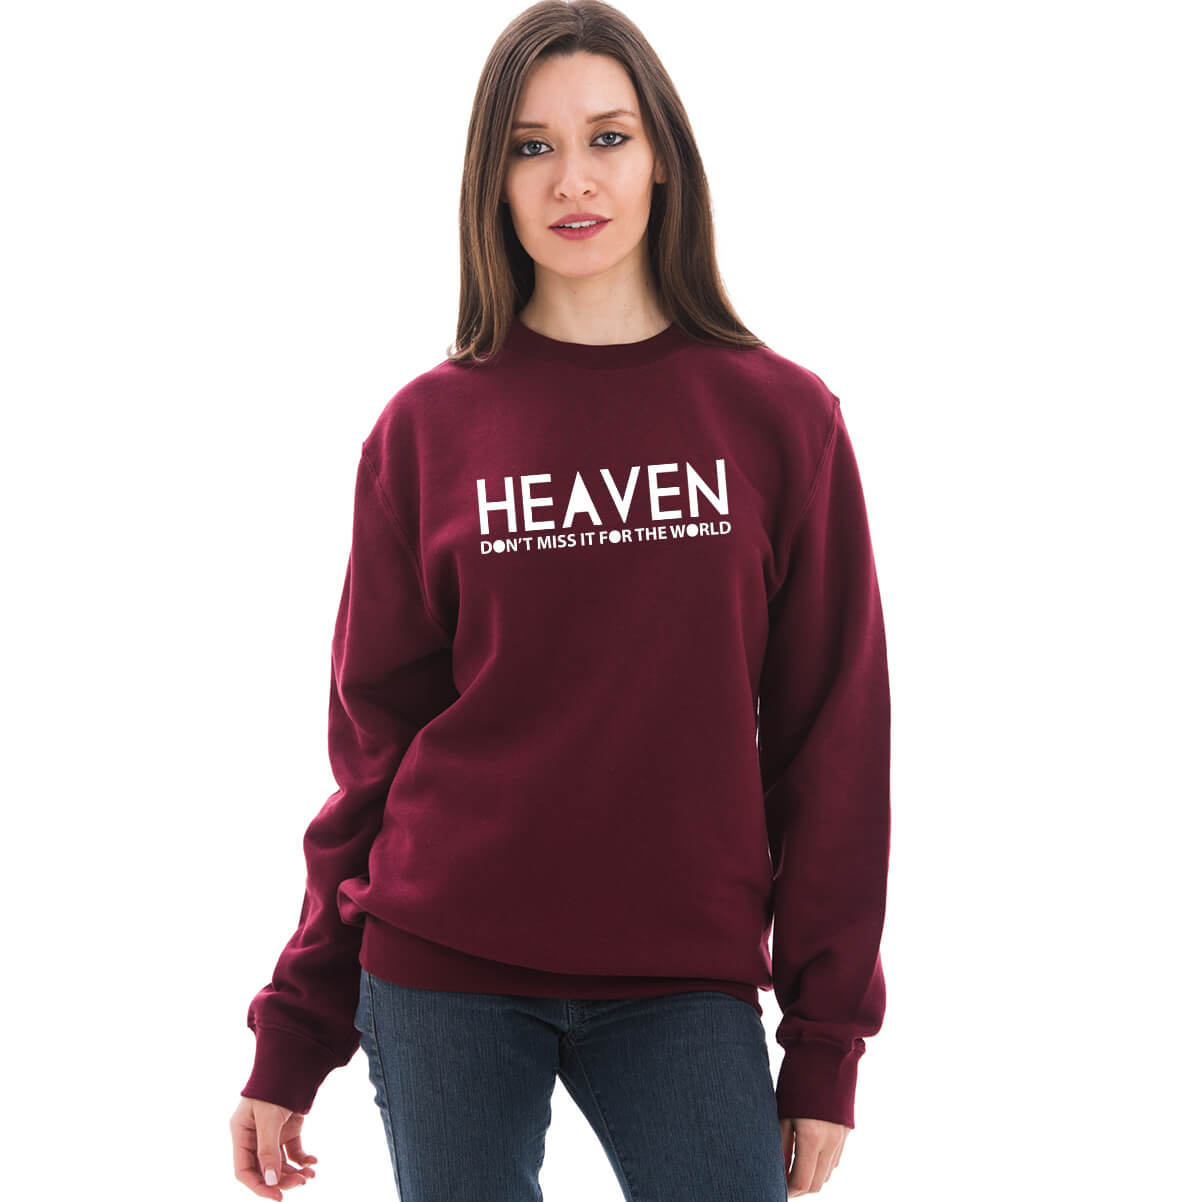 Heaven, Don't Miss It For The World Crewneck Sweatshirt